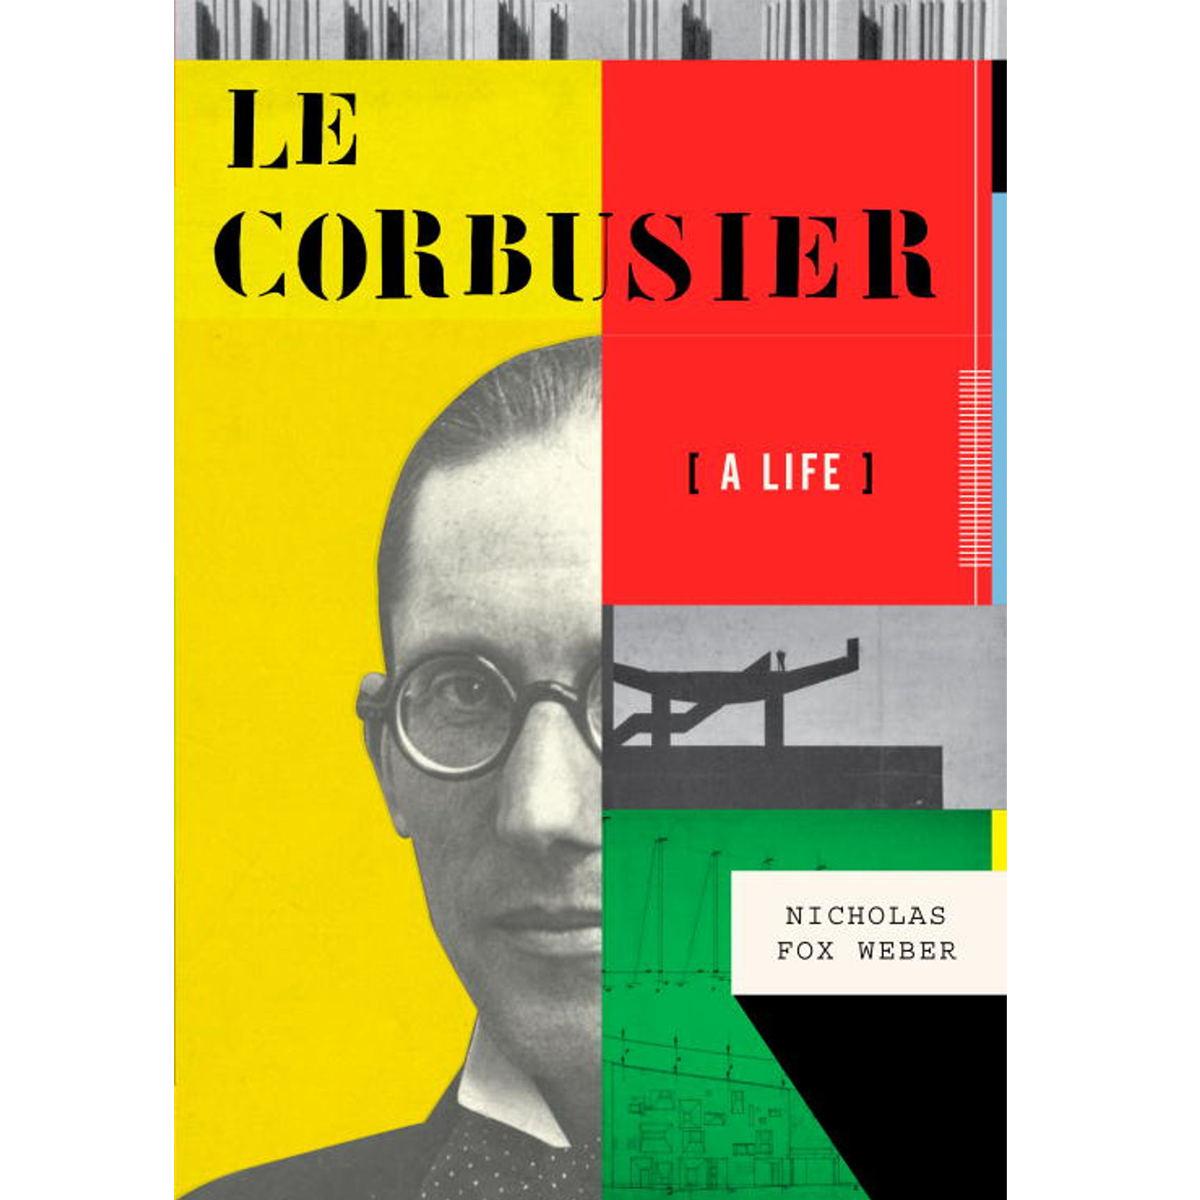 Le Corbusier: A Life